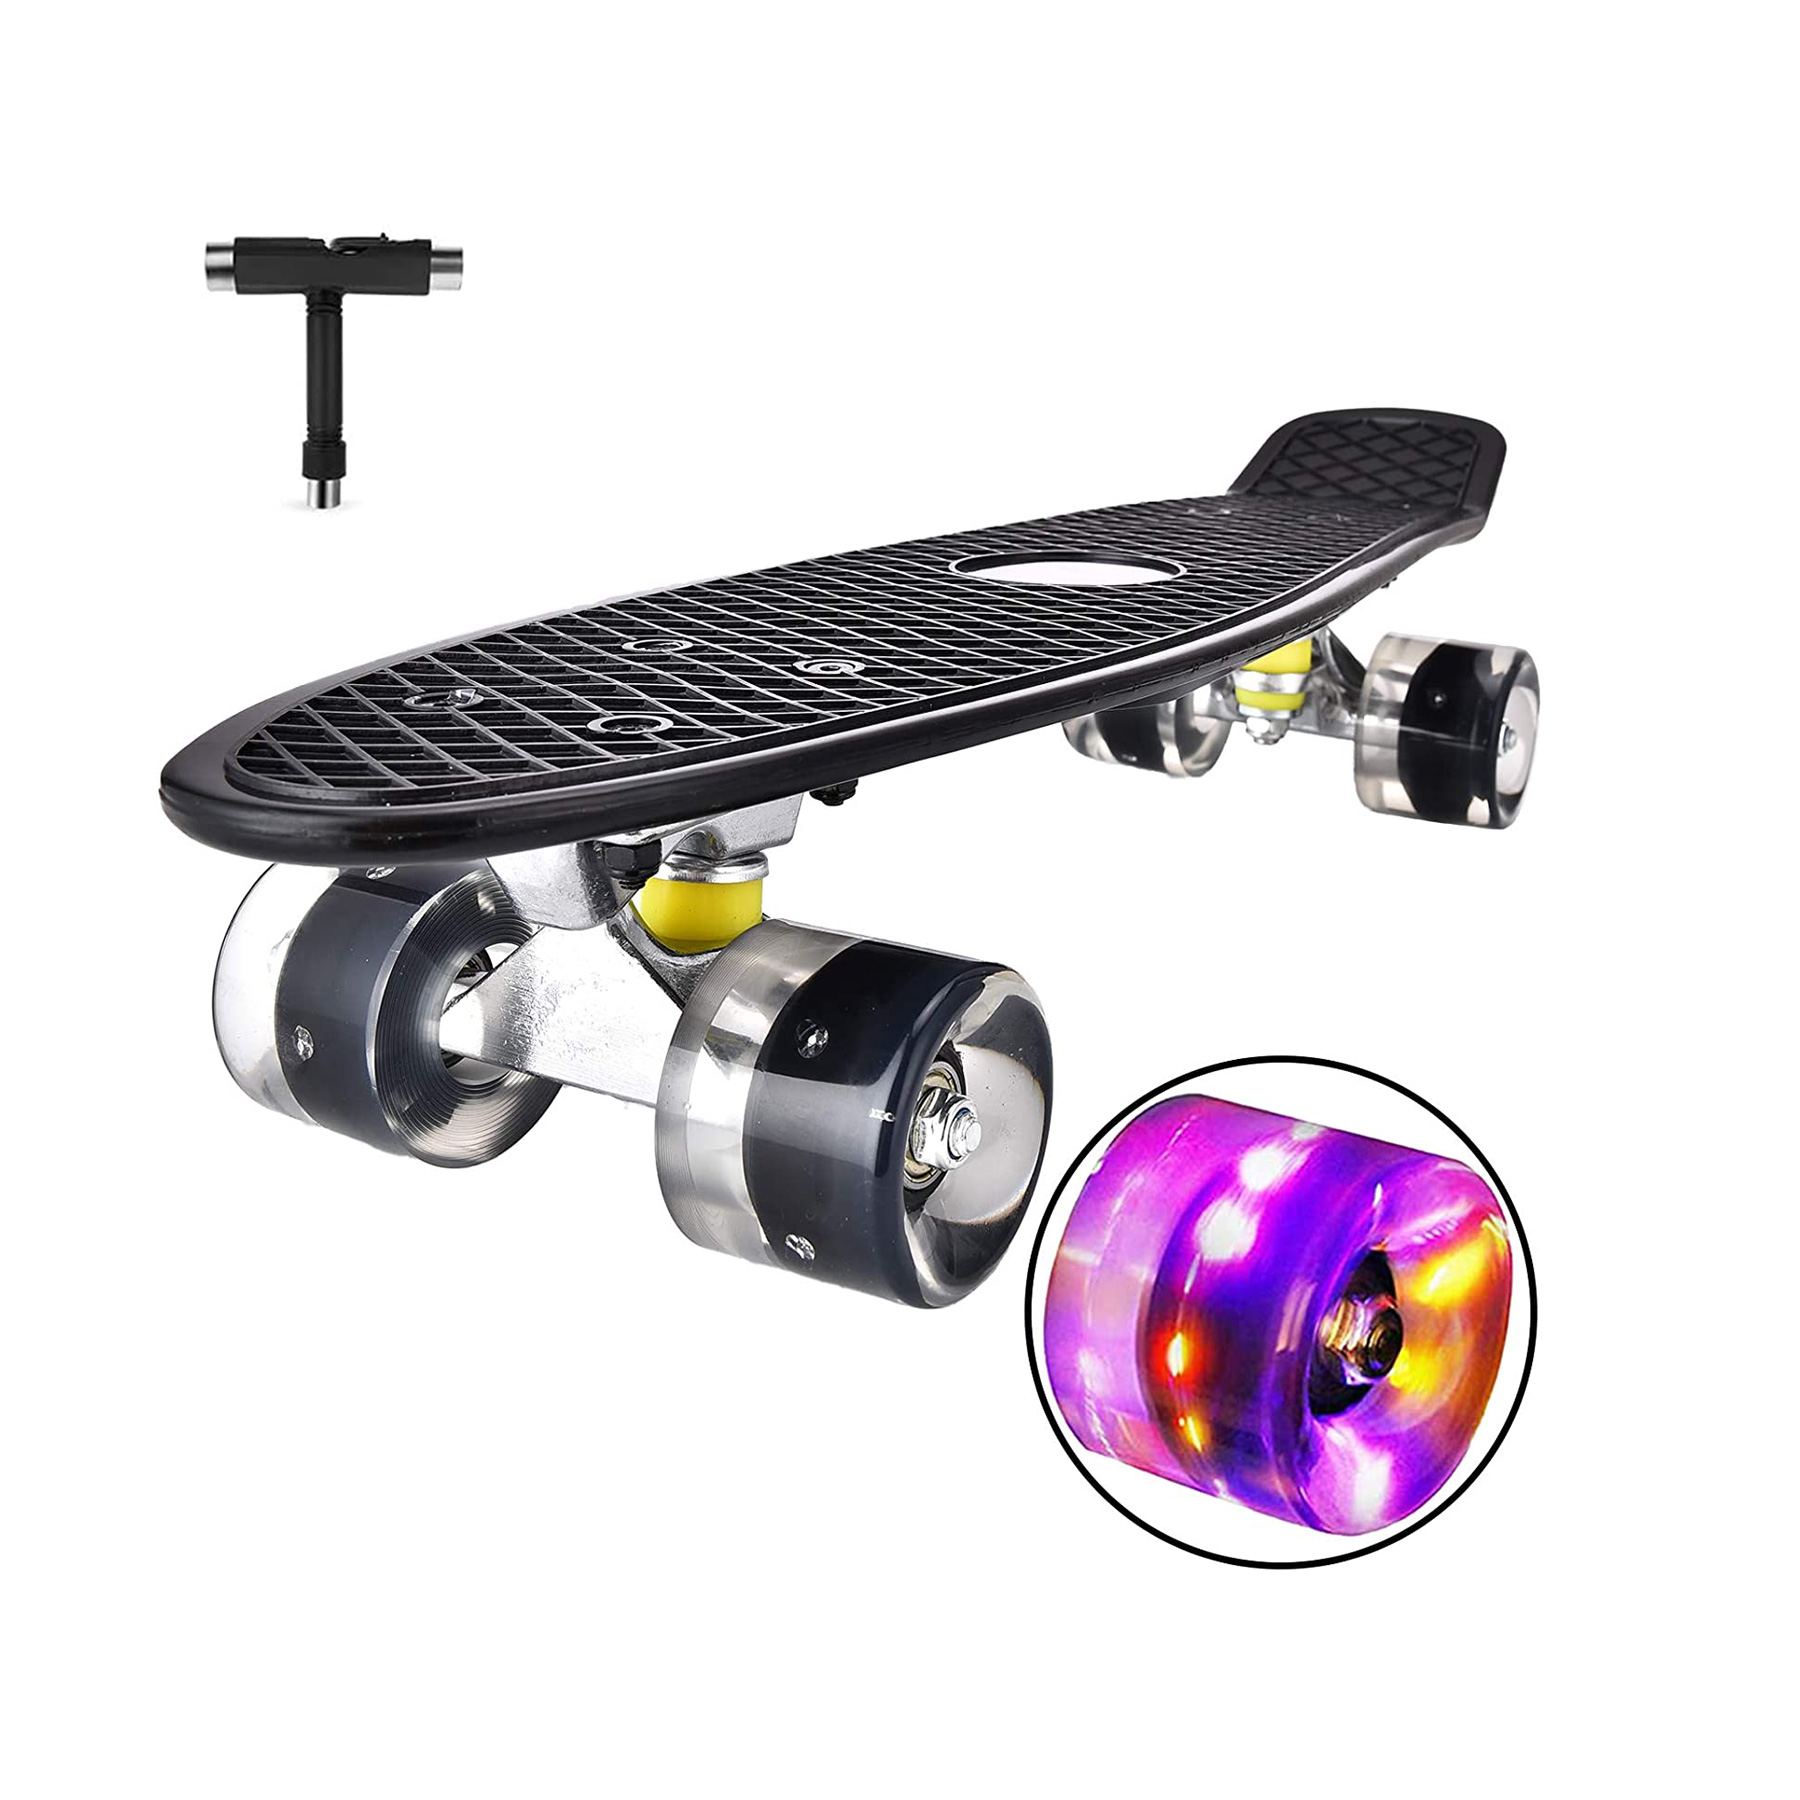 highly-flexible-22-inch-skateboard-1